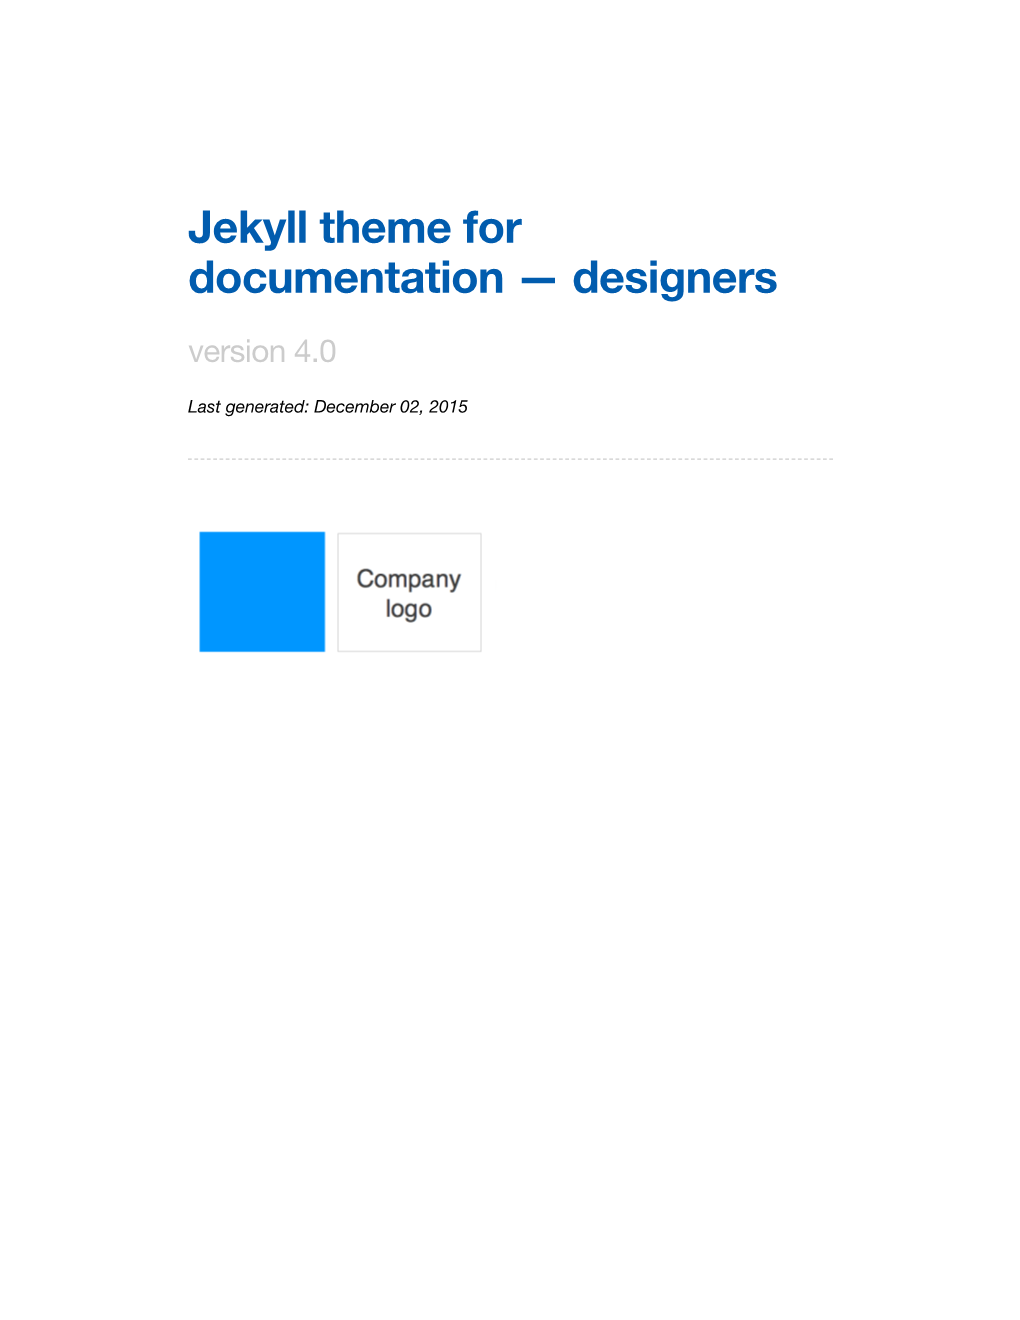 Jekyll Theme for Documentation — Designers Version 4.0